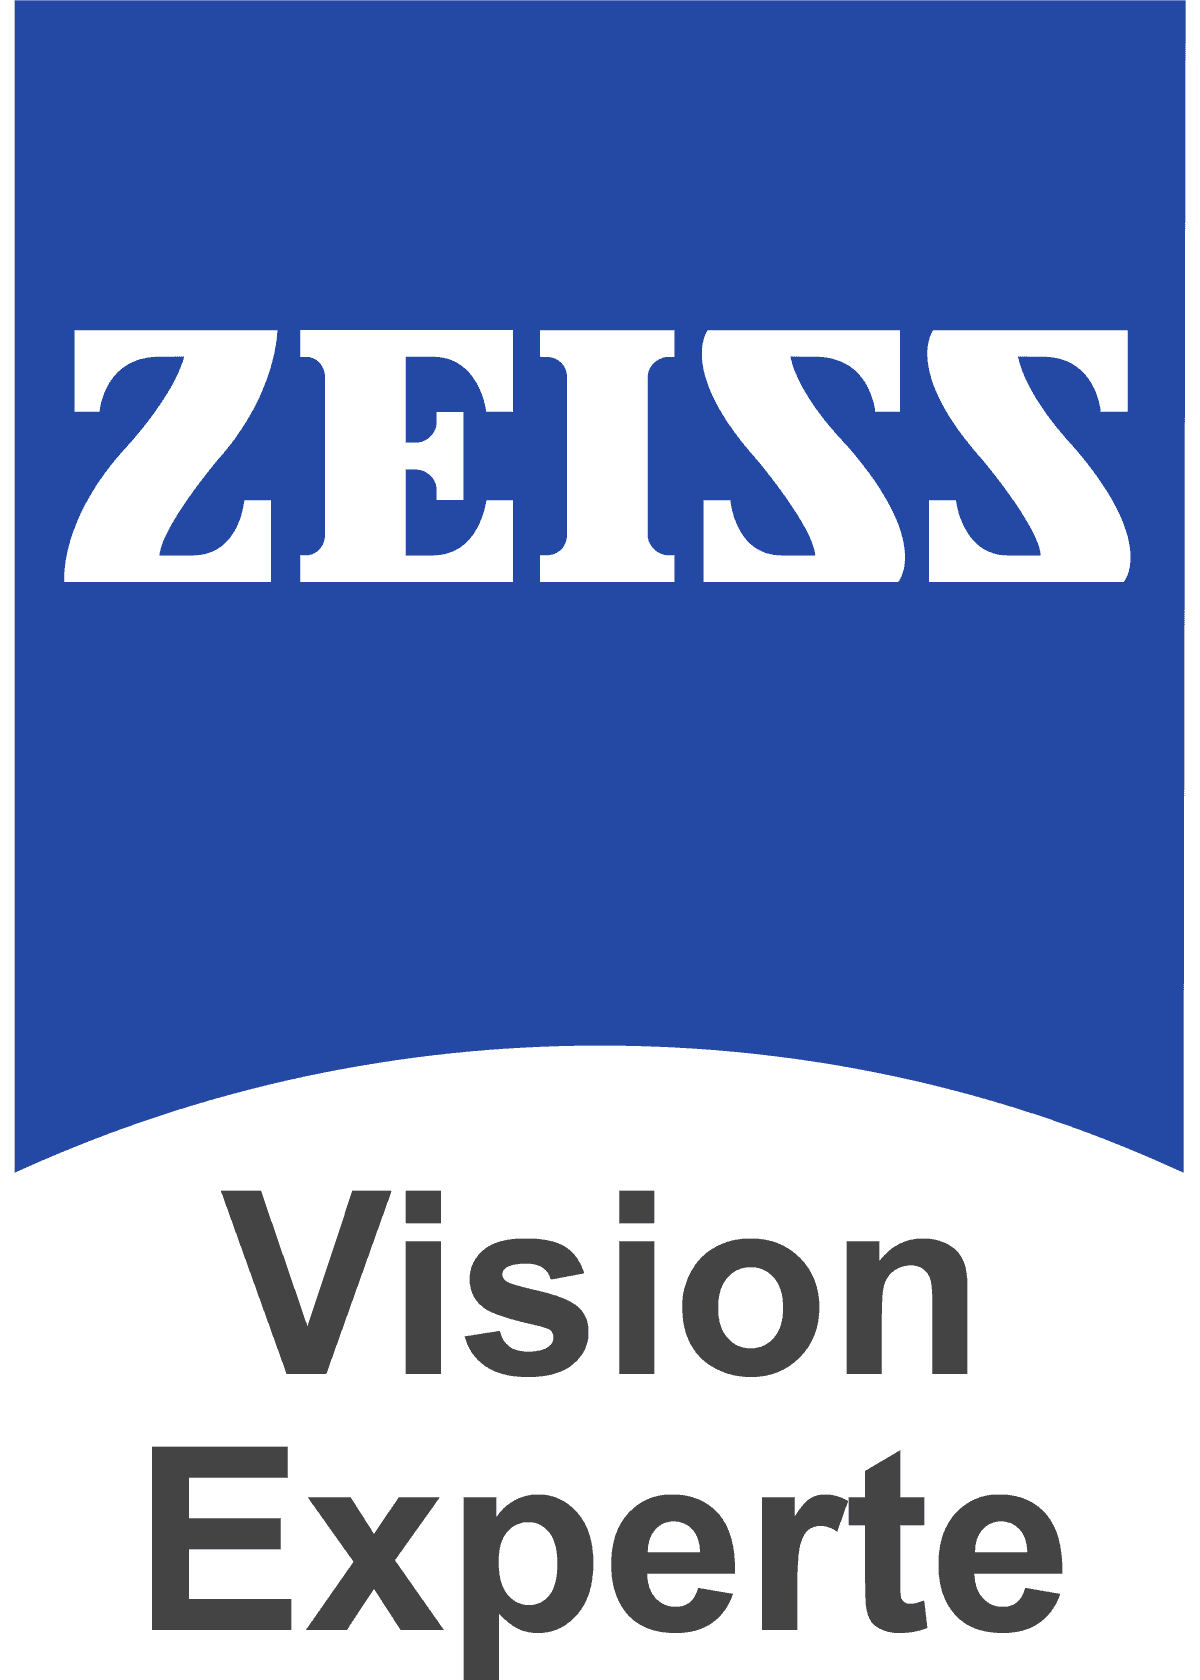 zeiss vision expert